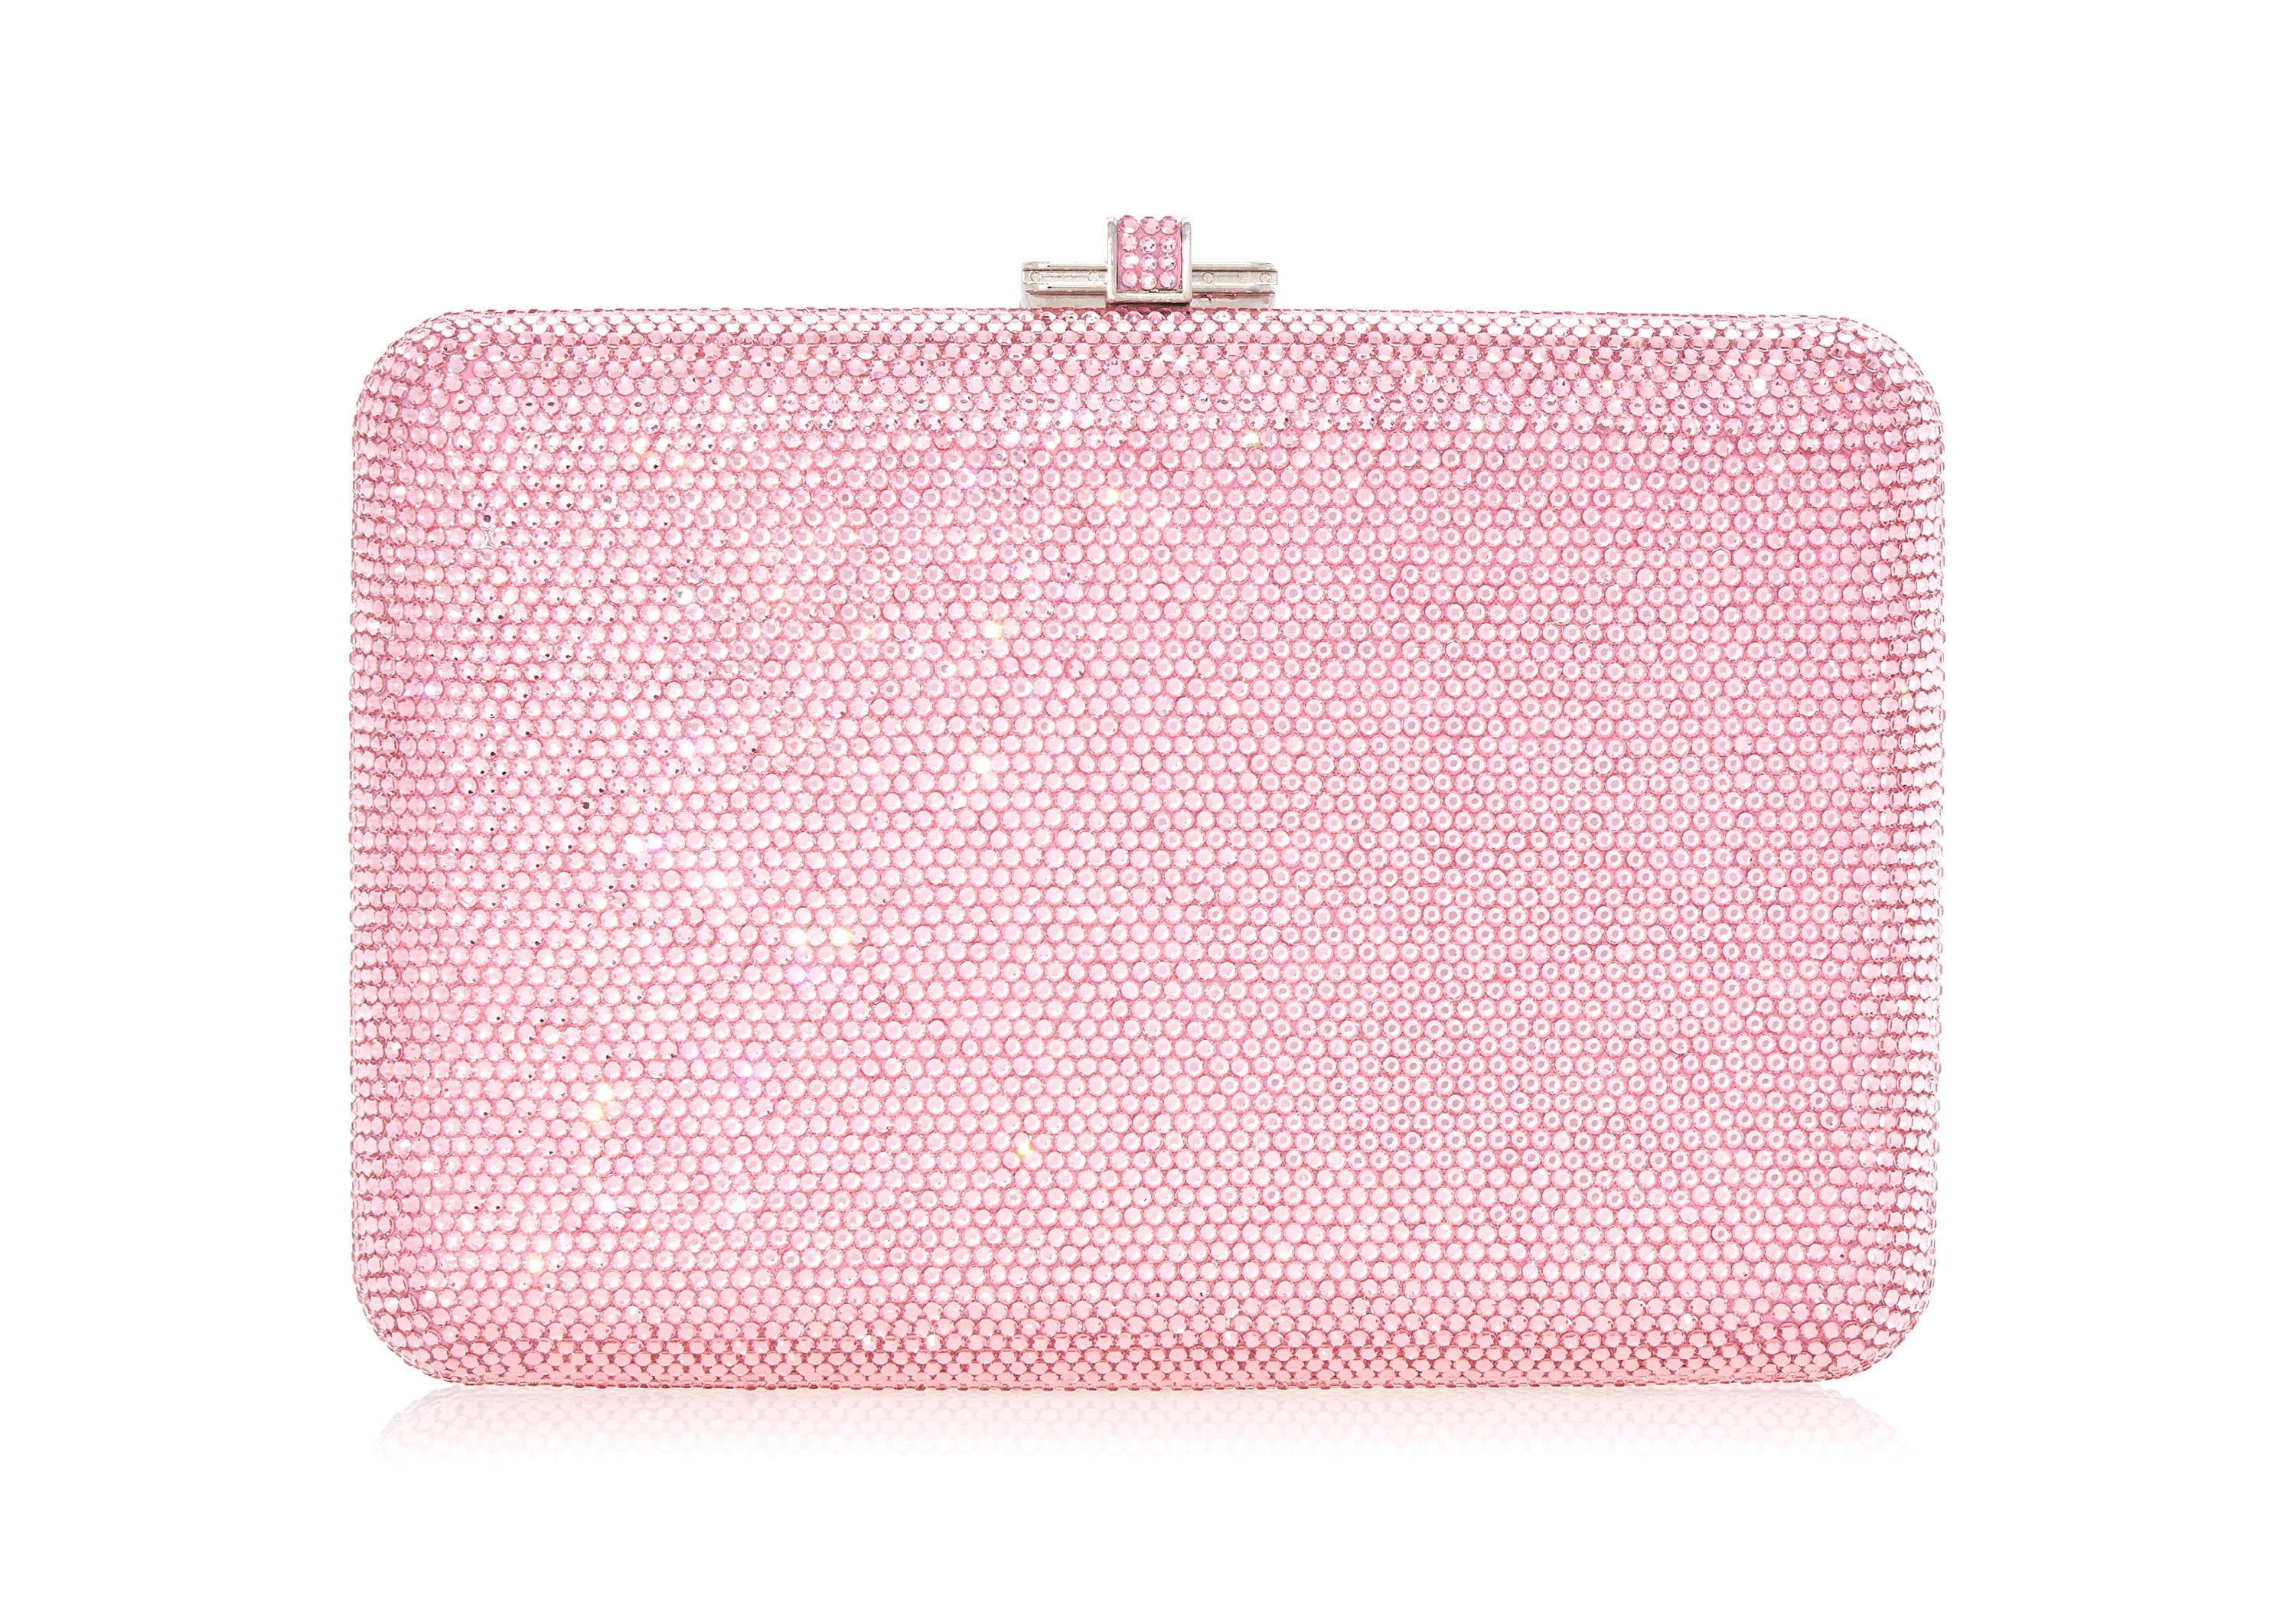 Judith Leiber pink Crystal-Embellished Peony Clutch Bag